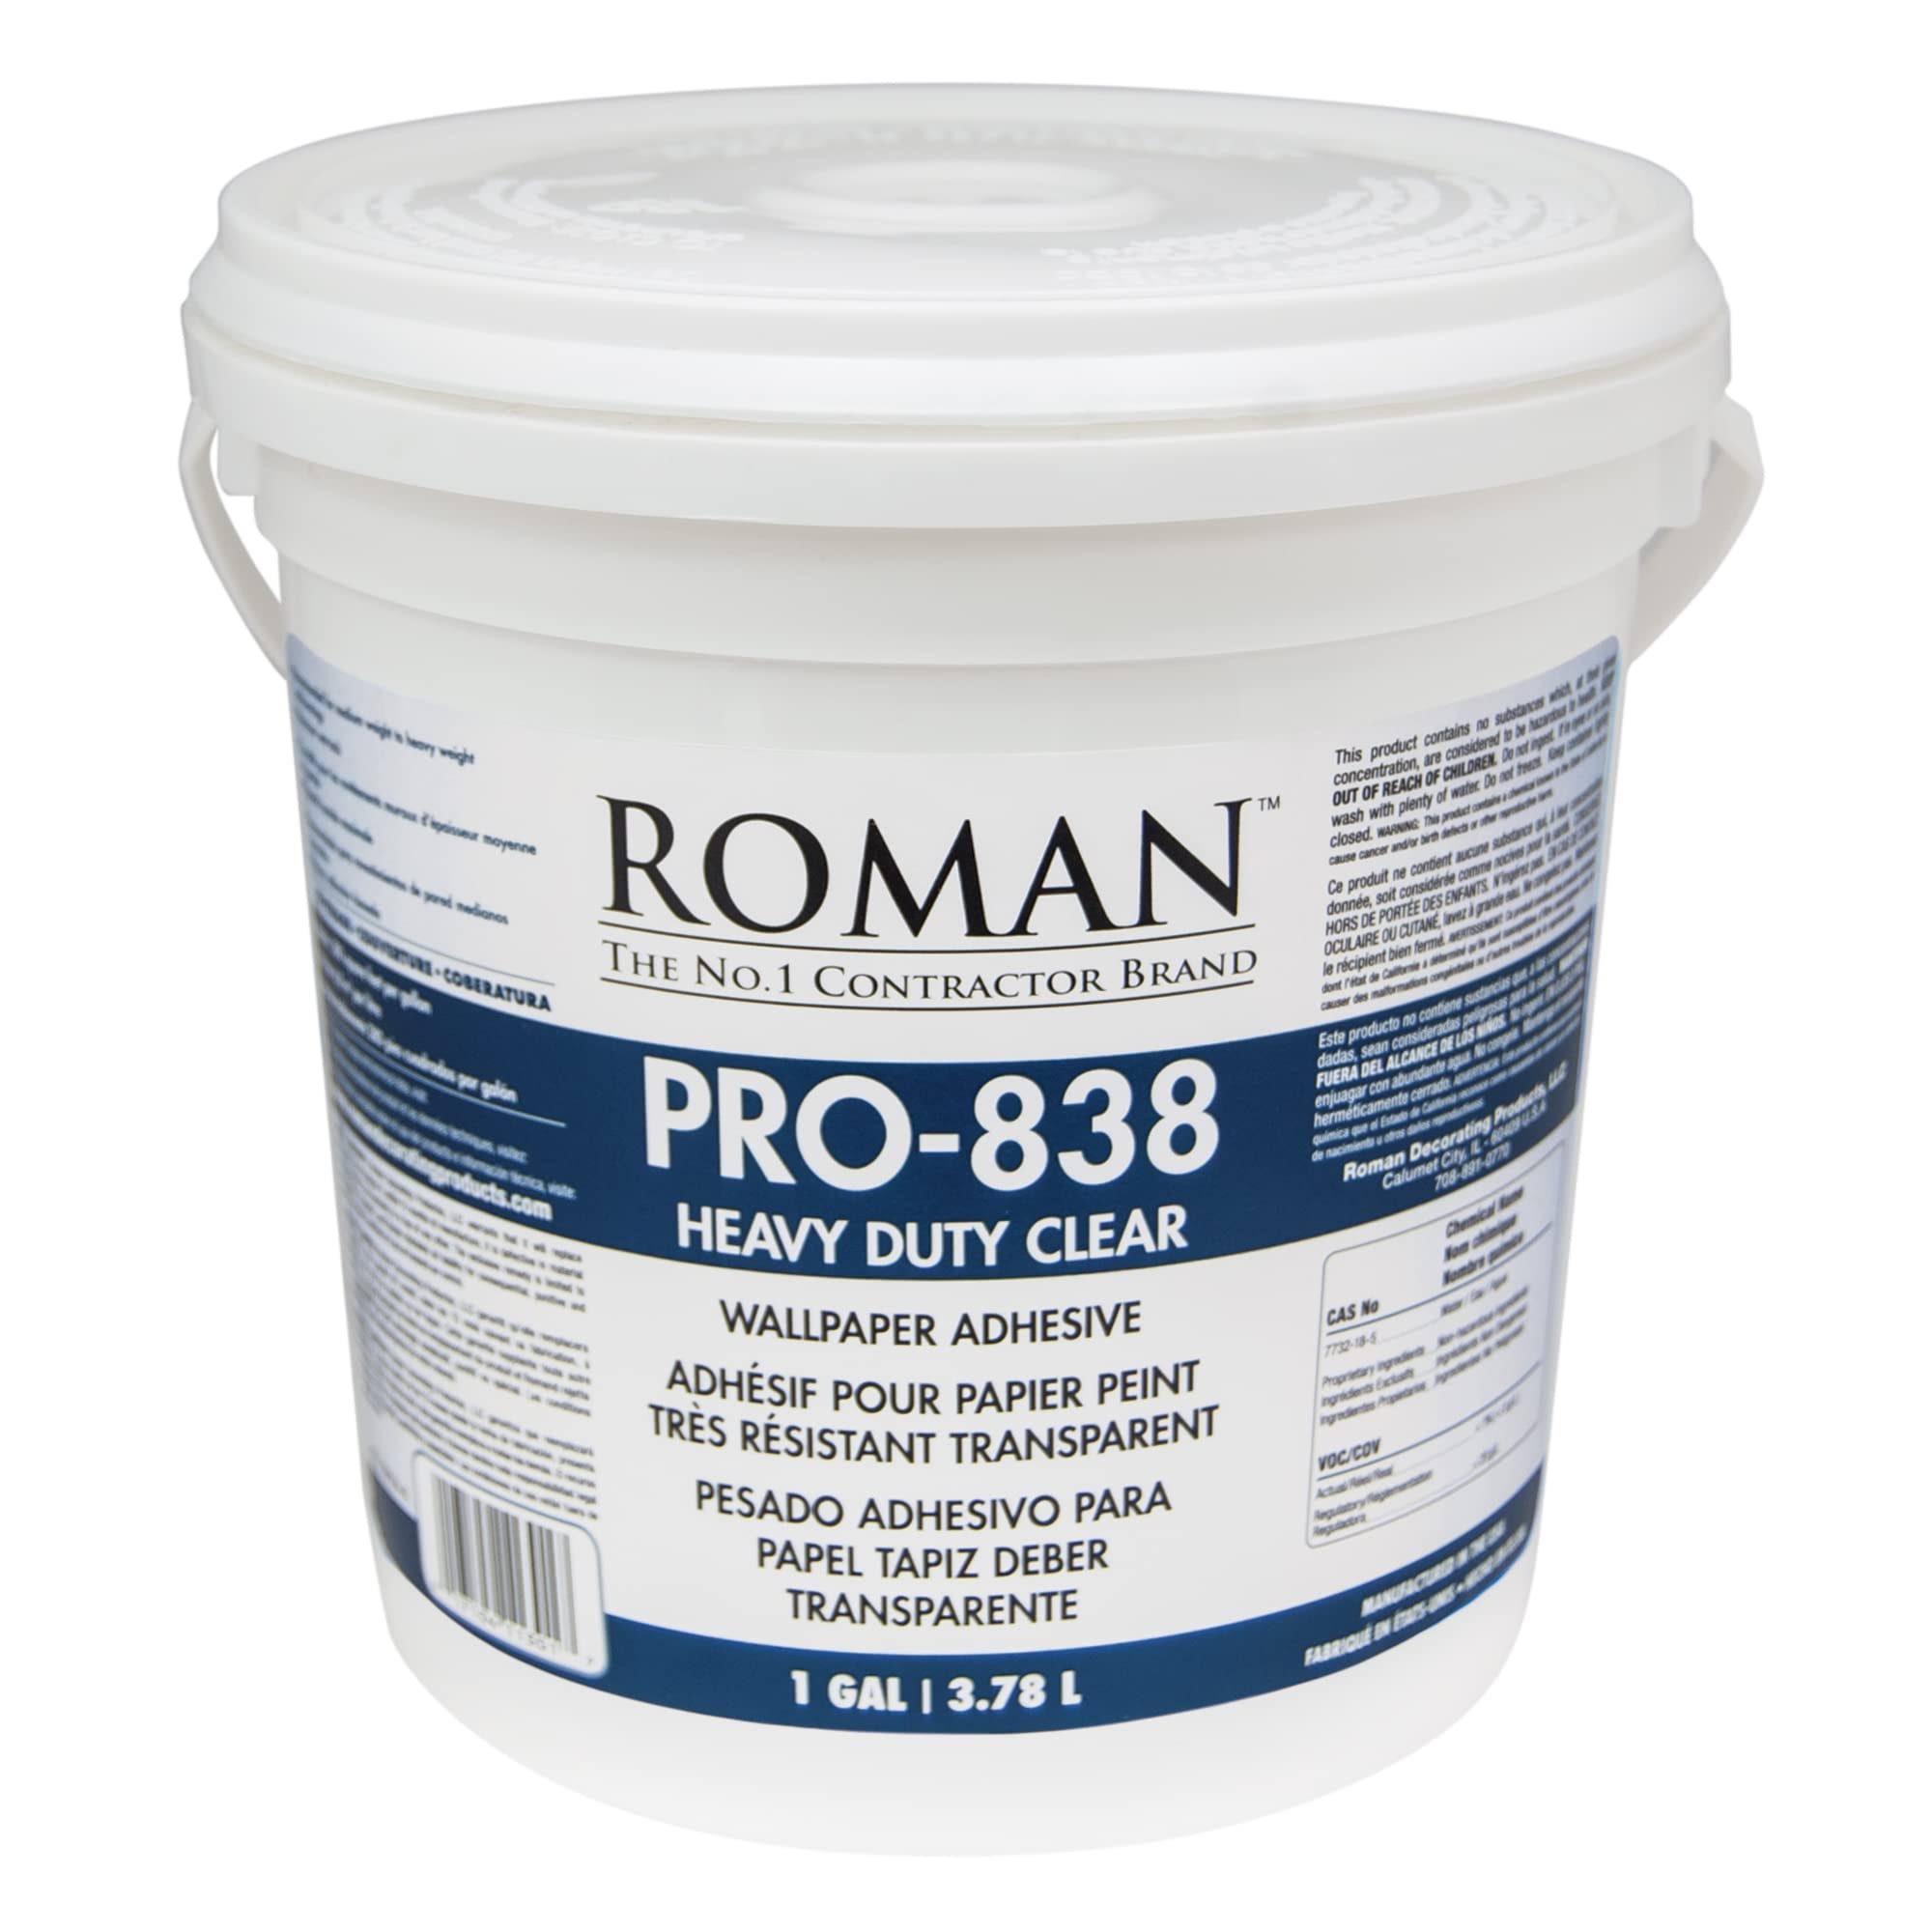 Roman PRO-838 Heavy Duty Wallpaper Adhesive, Clear, 1 Gal